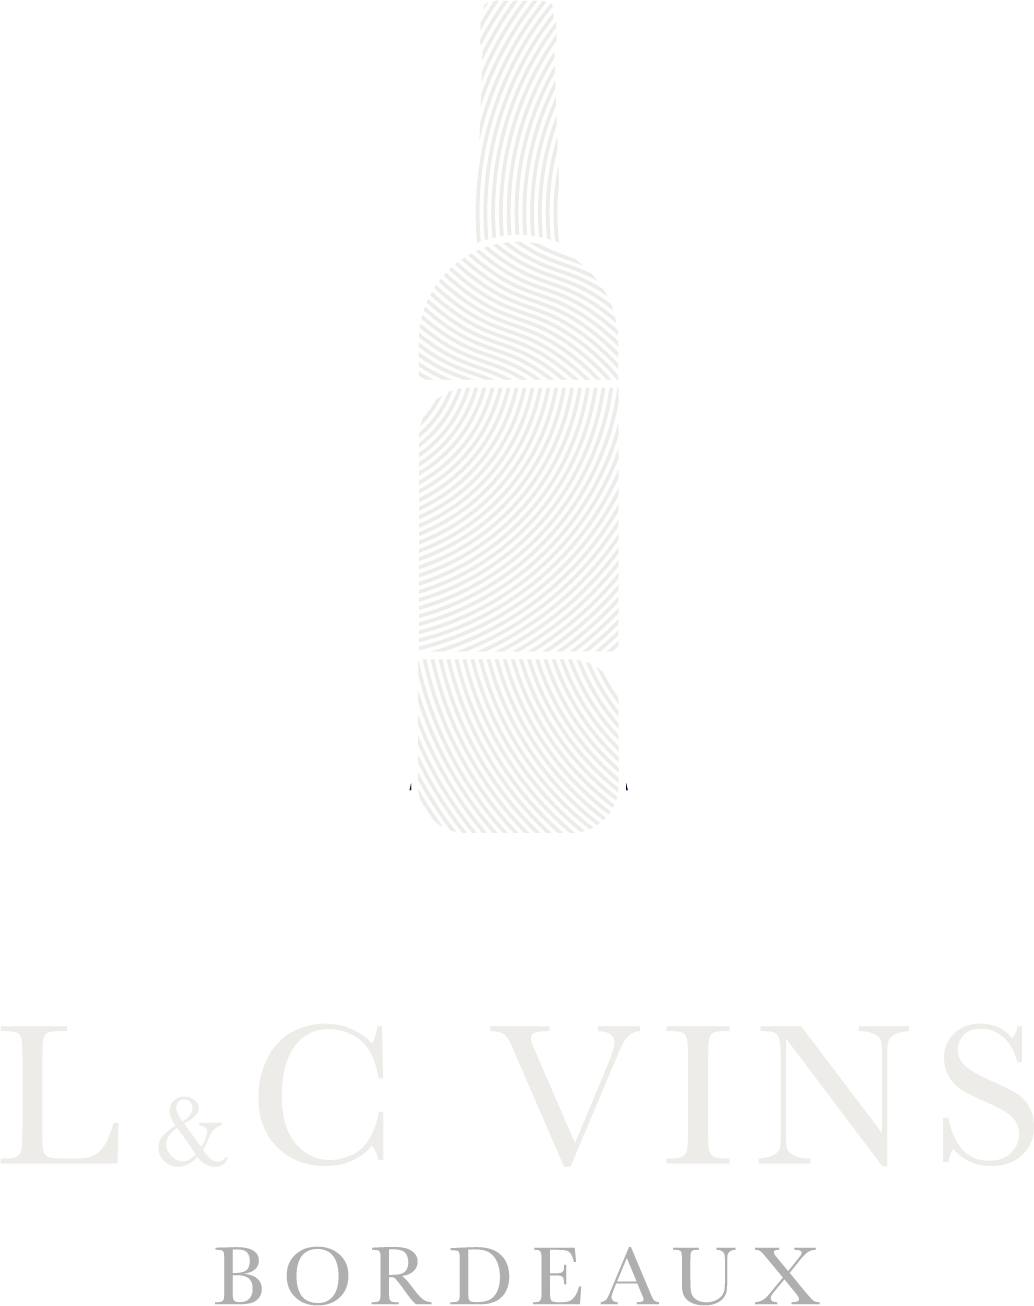 Logotype L&C vins representing 3 bottles of wine